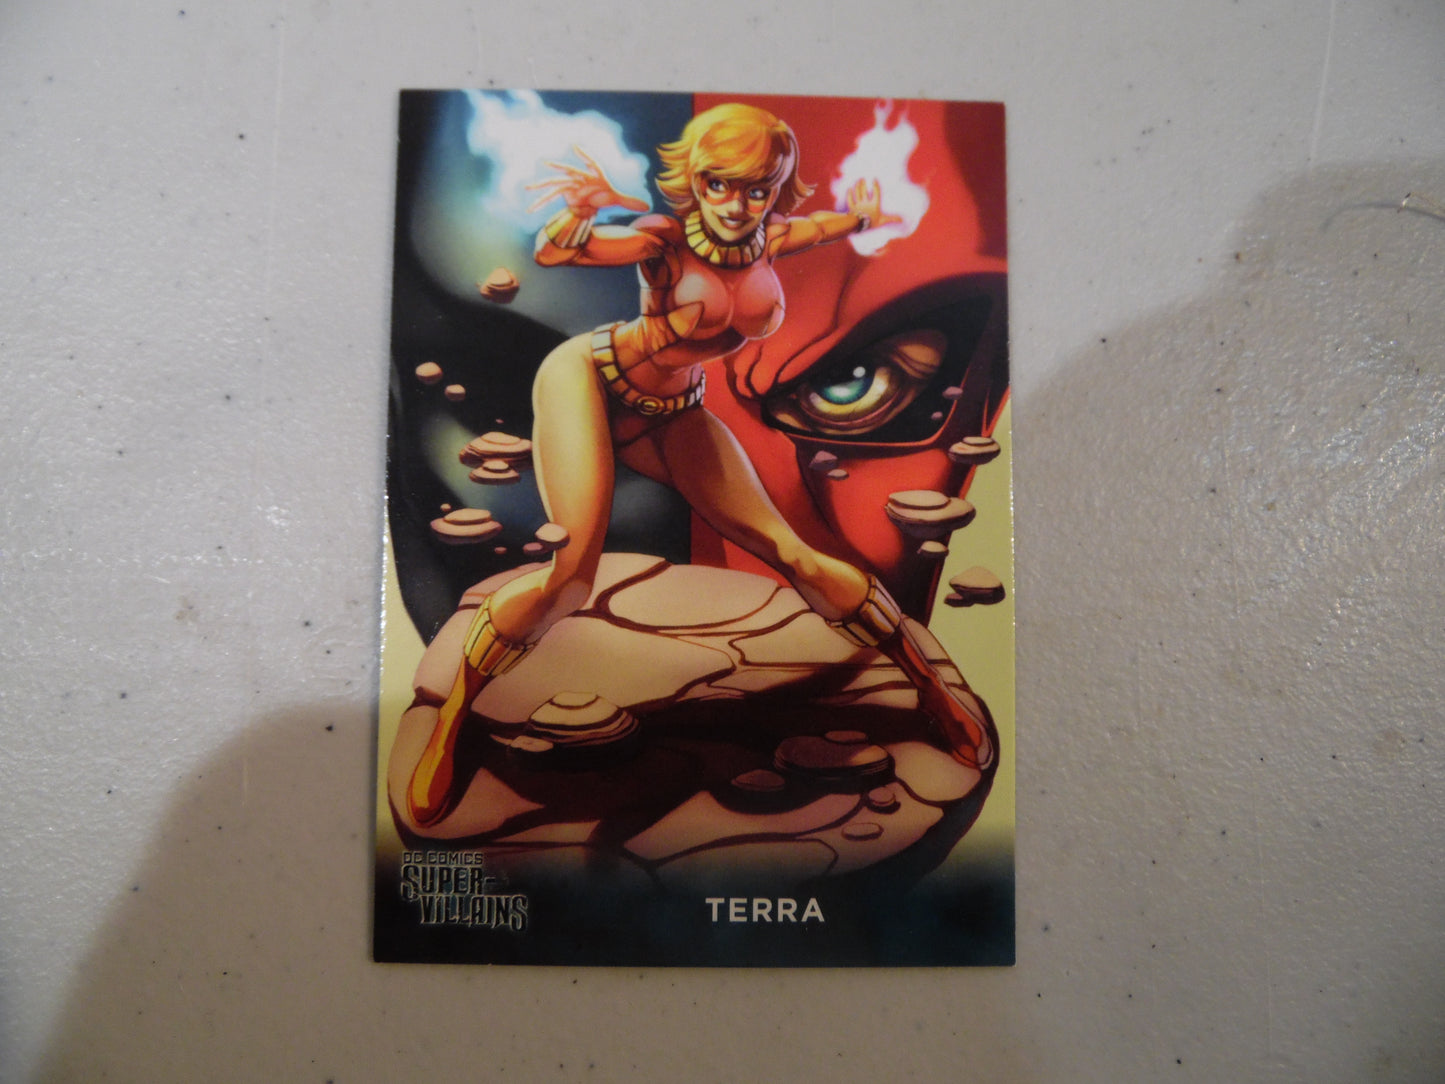 DC Comics Super-Villains 2015 Trading Card Lot of 5 Cards